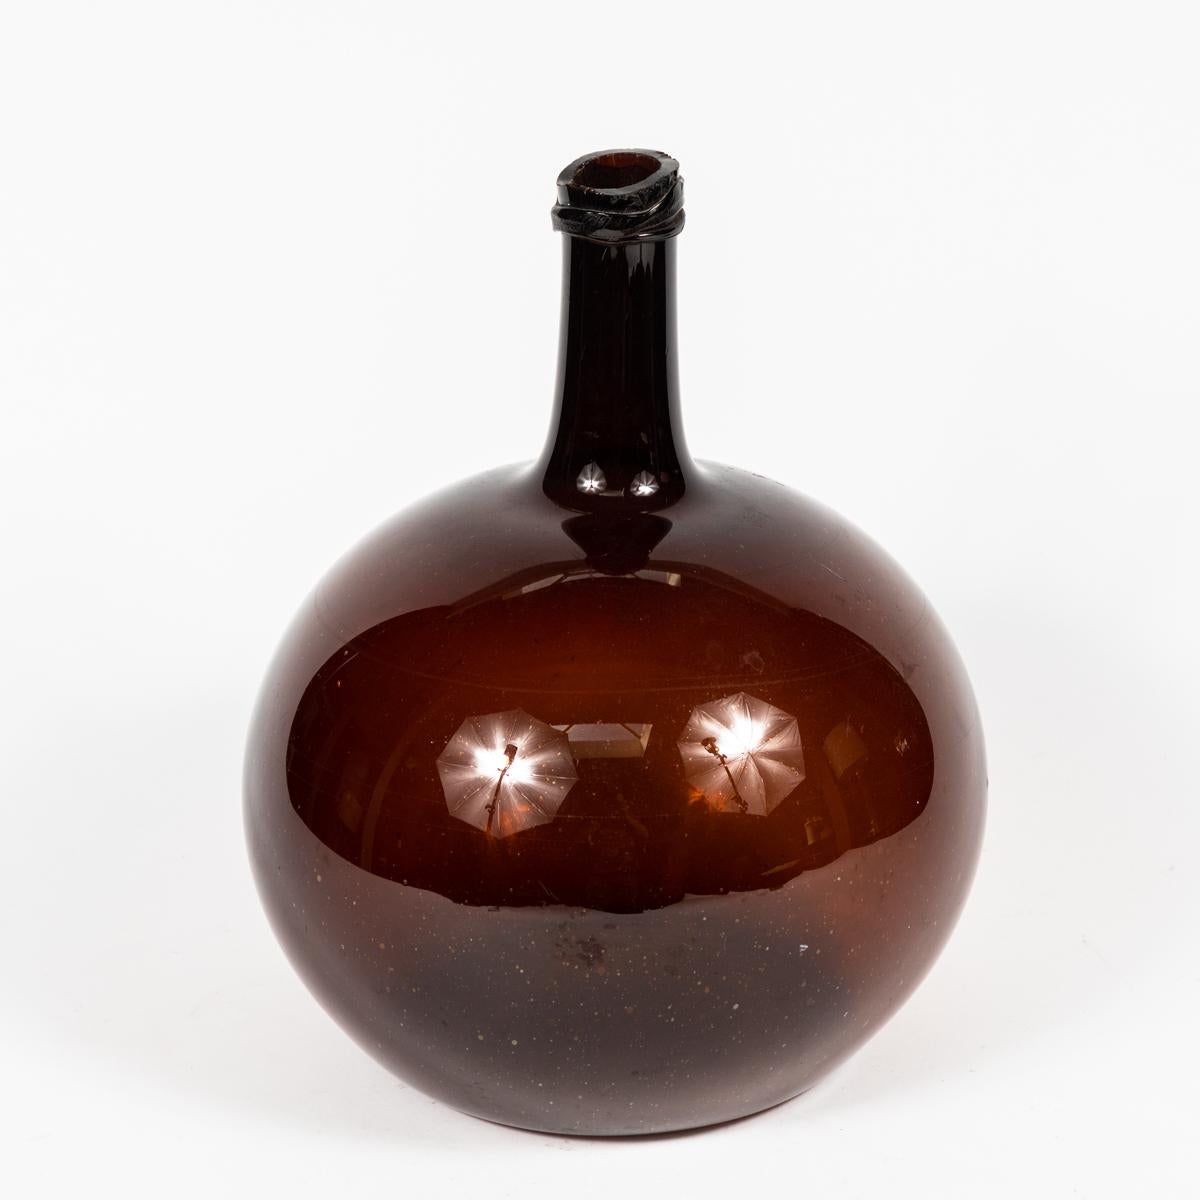 19th century brown blown glass bottle or spirit keg from Burgundy, France.